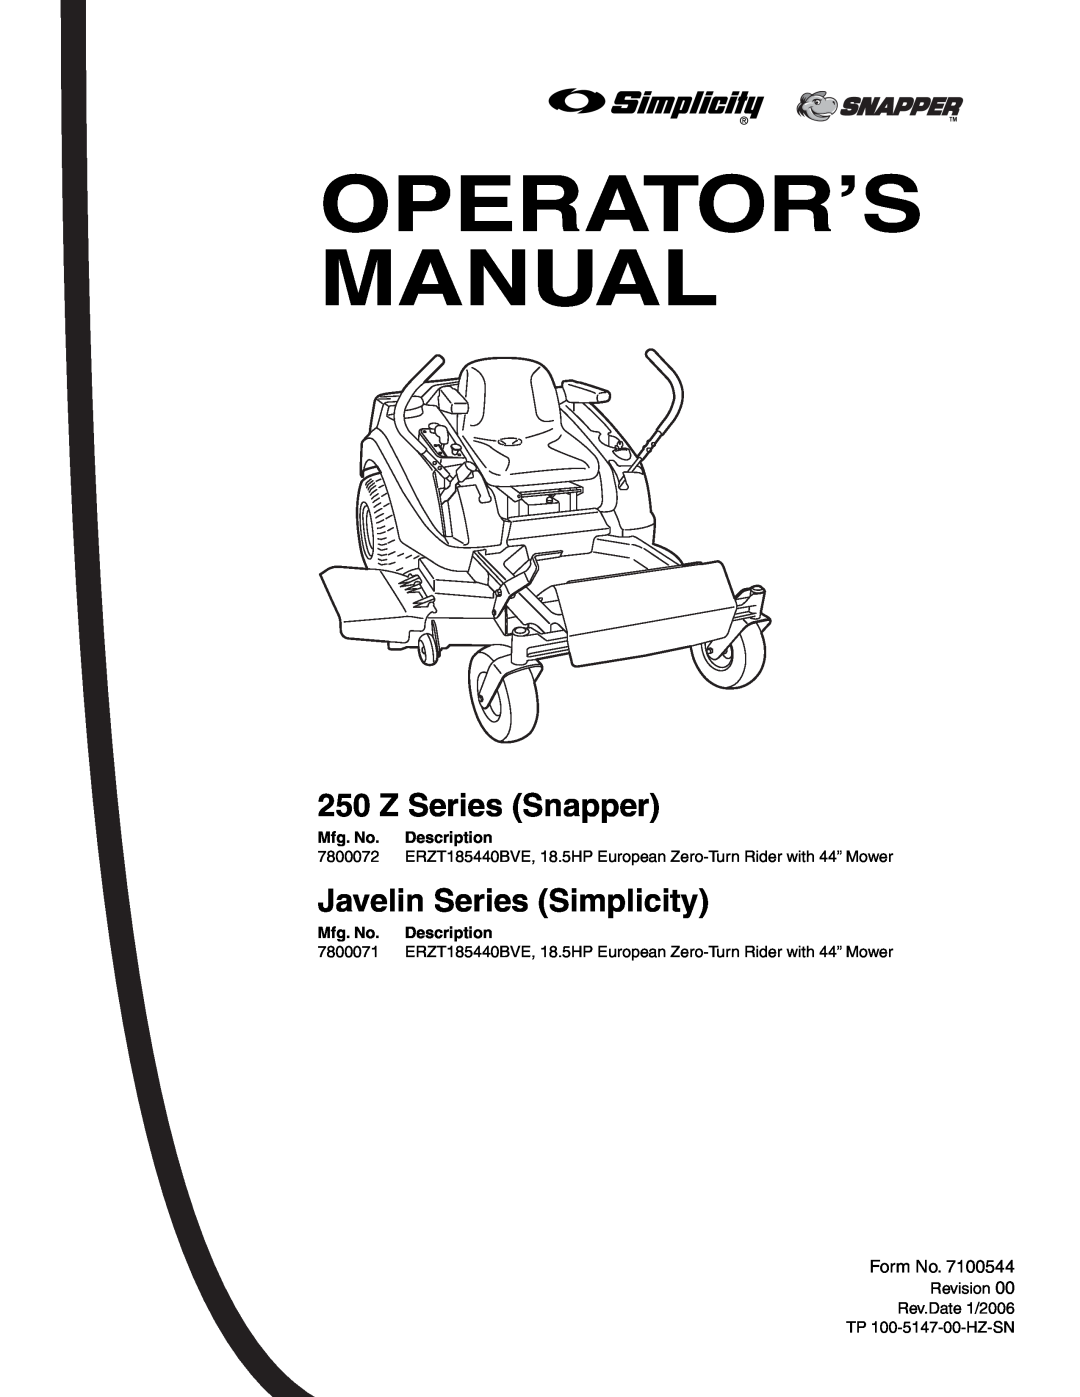 Simplicity 7800072, 7800071 Z Series Snapper, Javelin Series Simplicity, Operator’S Manual, Mfg. No. Description 